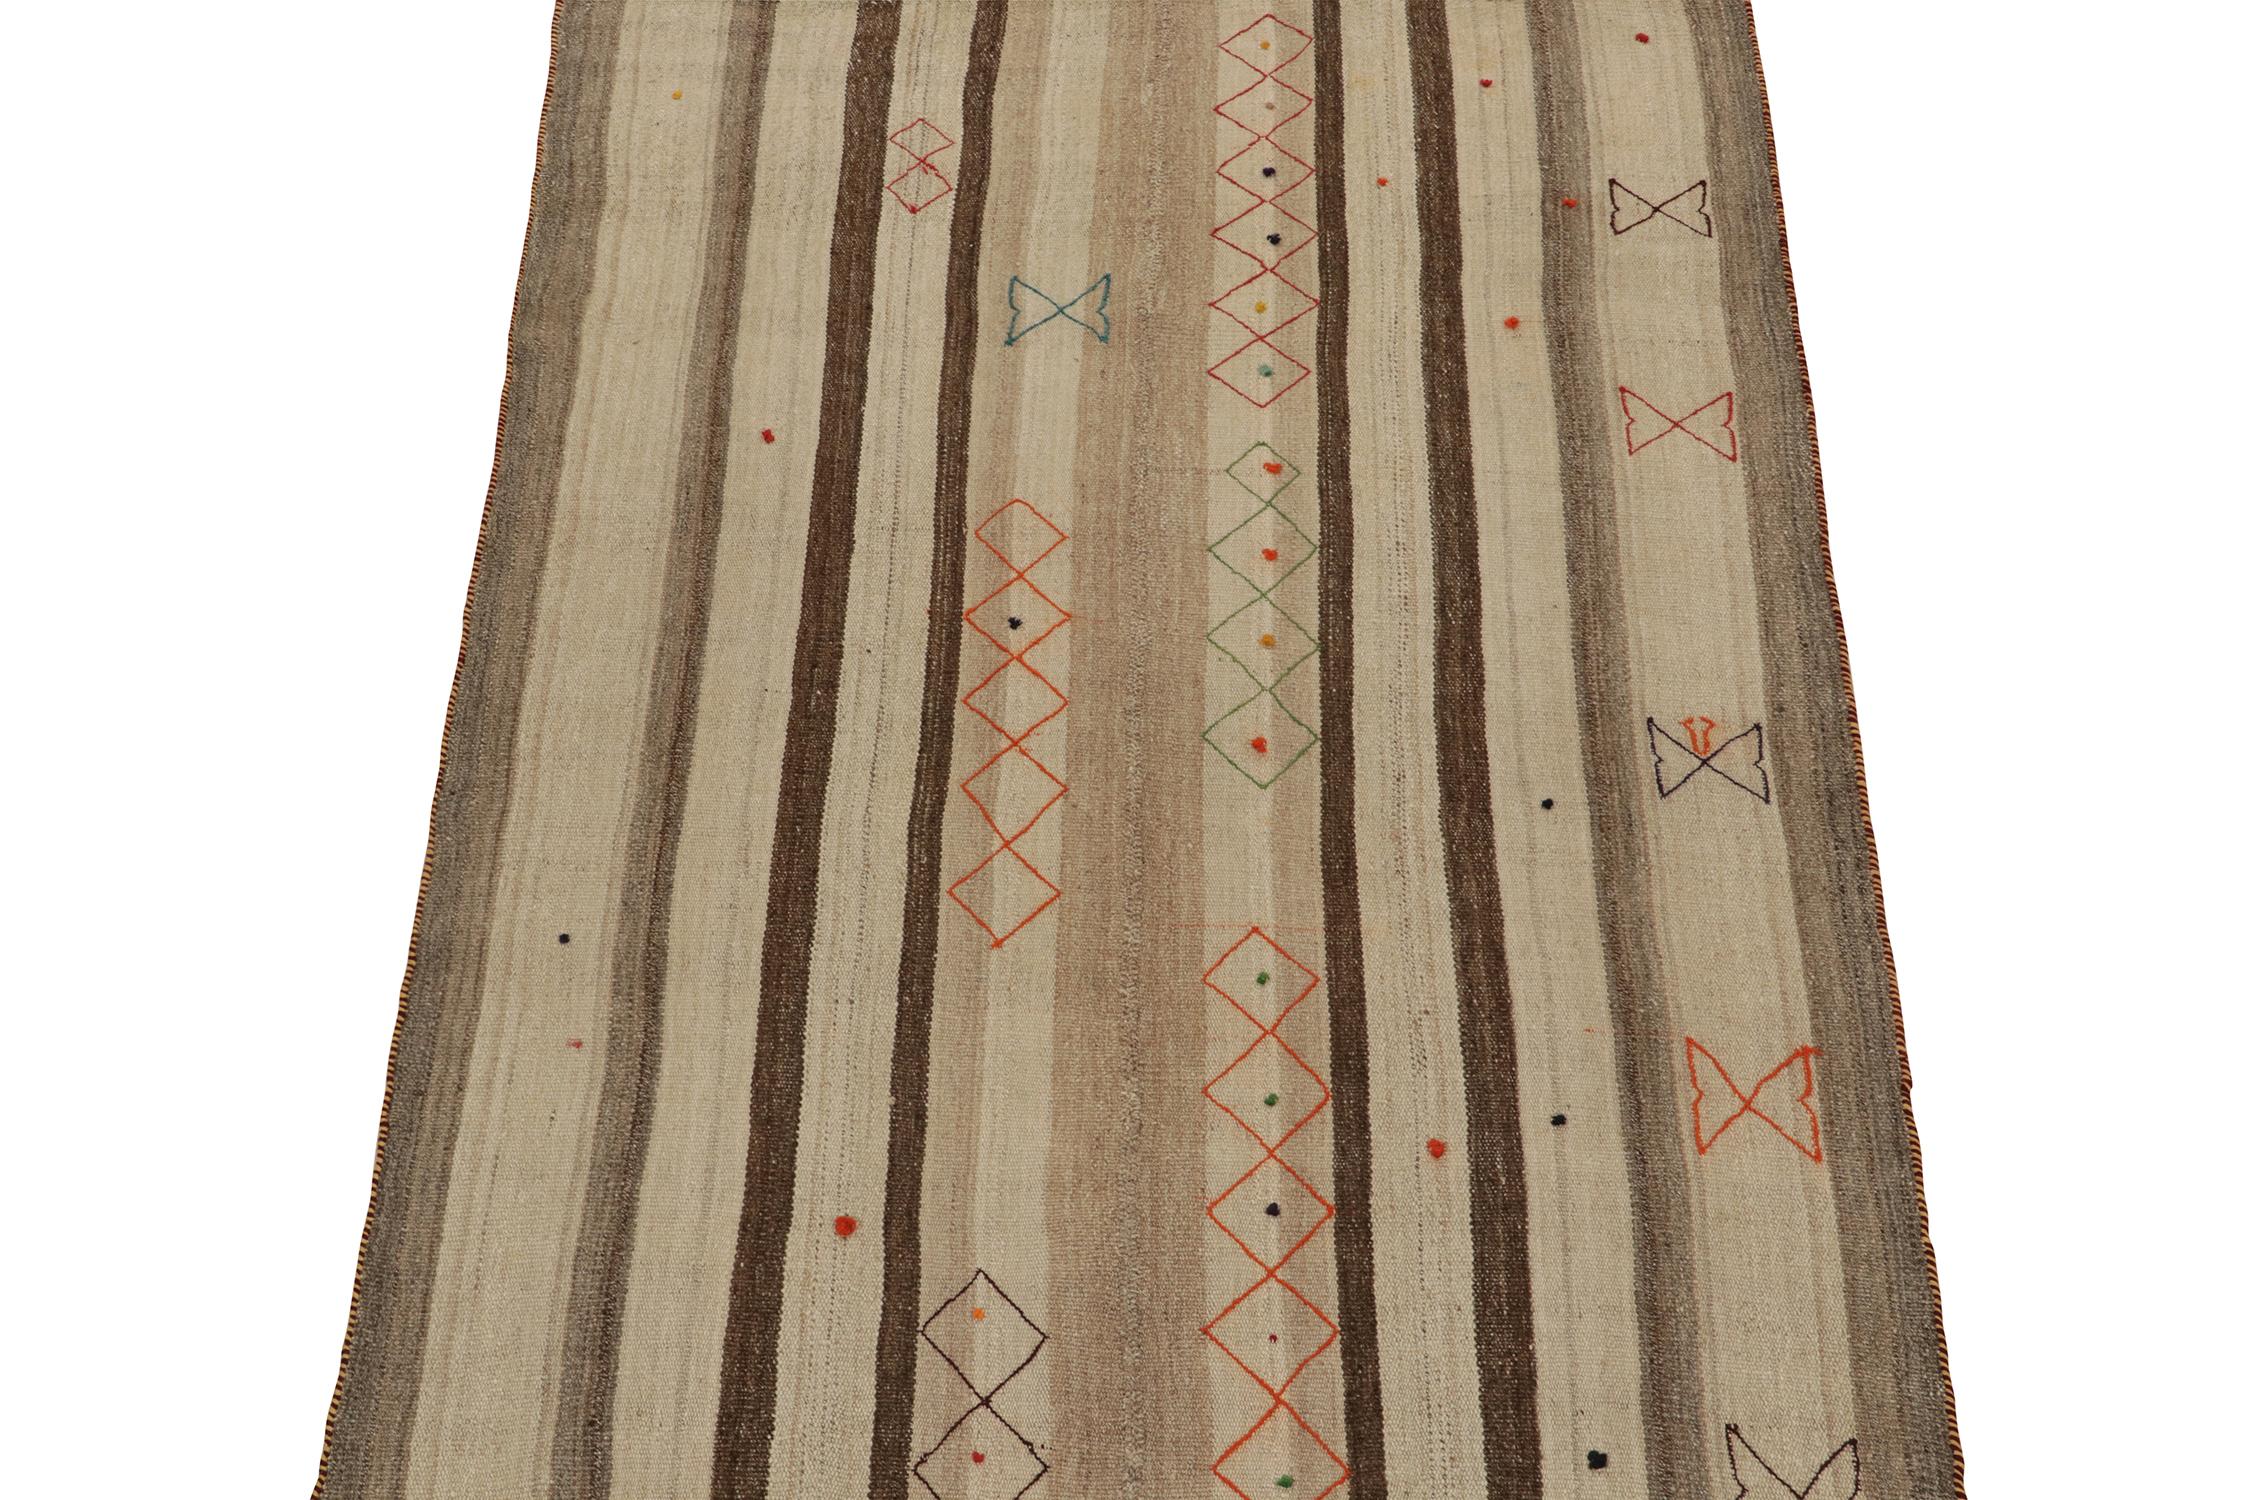 Tribal Vintage Persian Kilim Rug in Beige-Brown Stripes and Motifs by Rug & Kilim For Sale